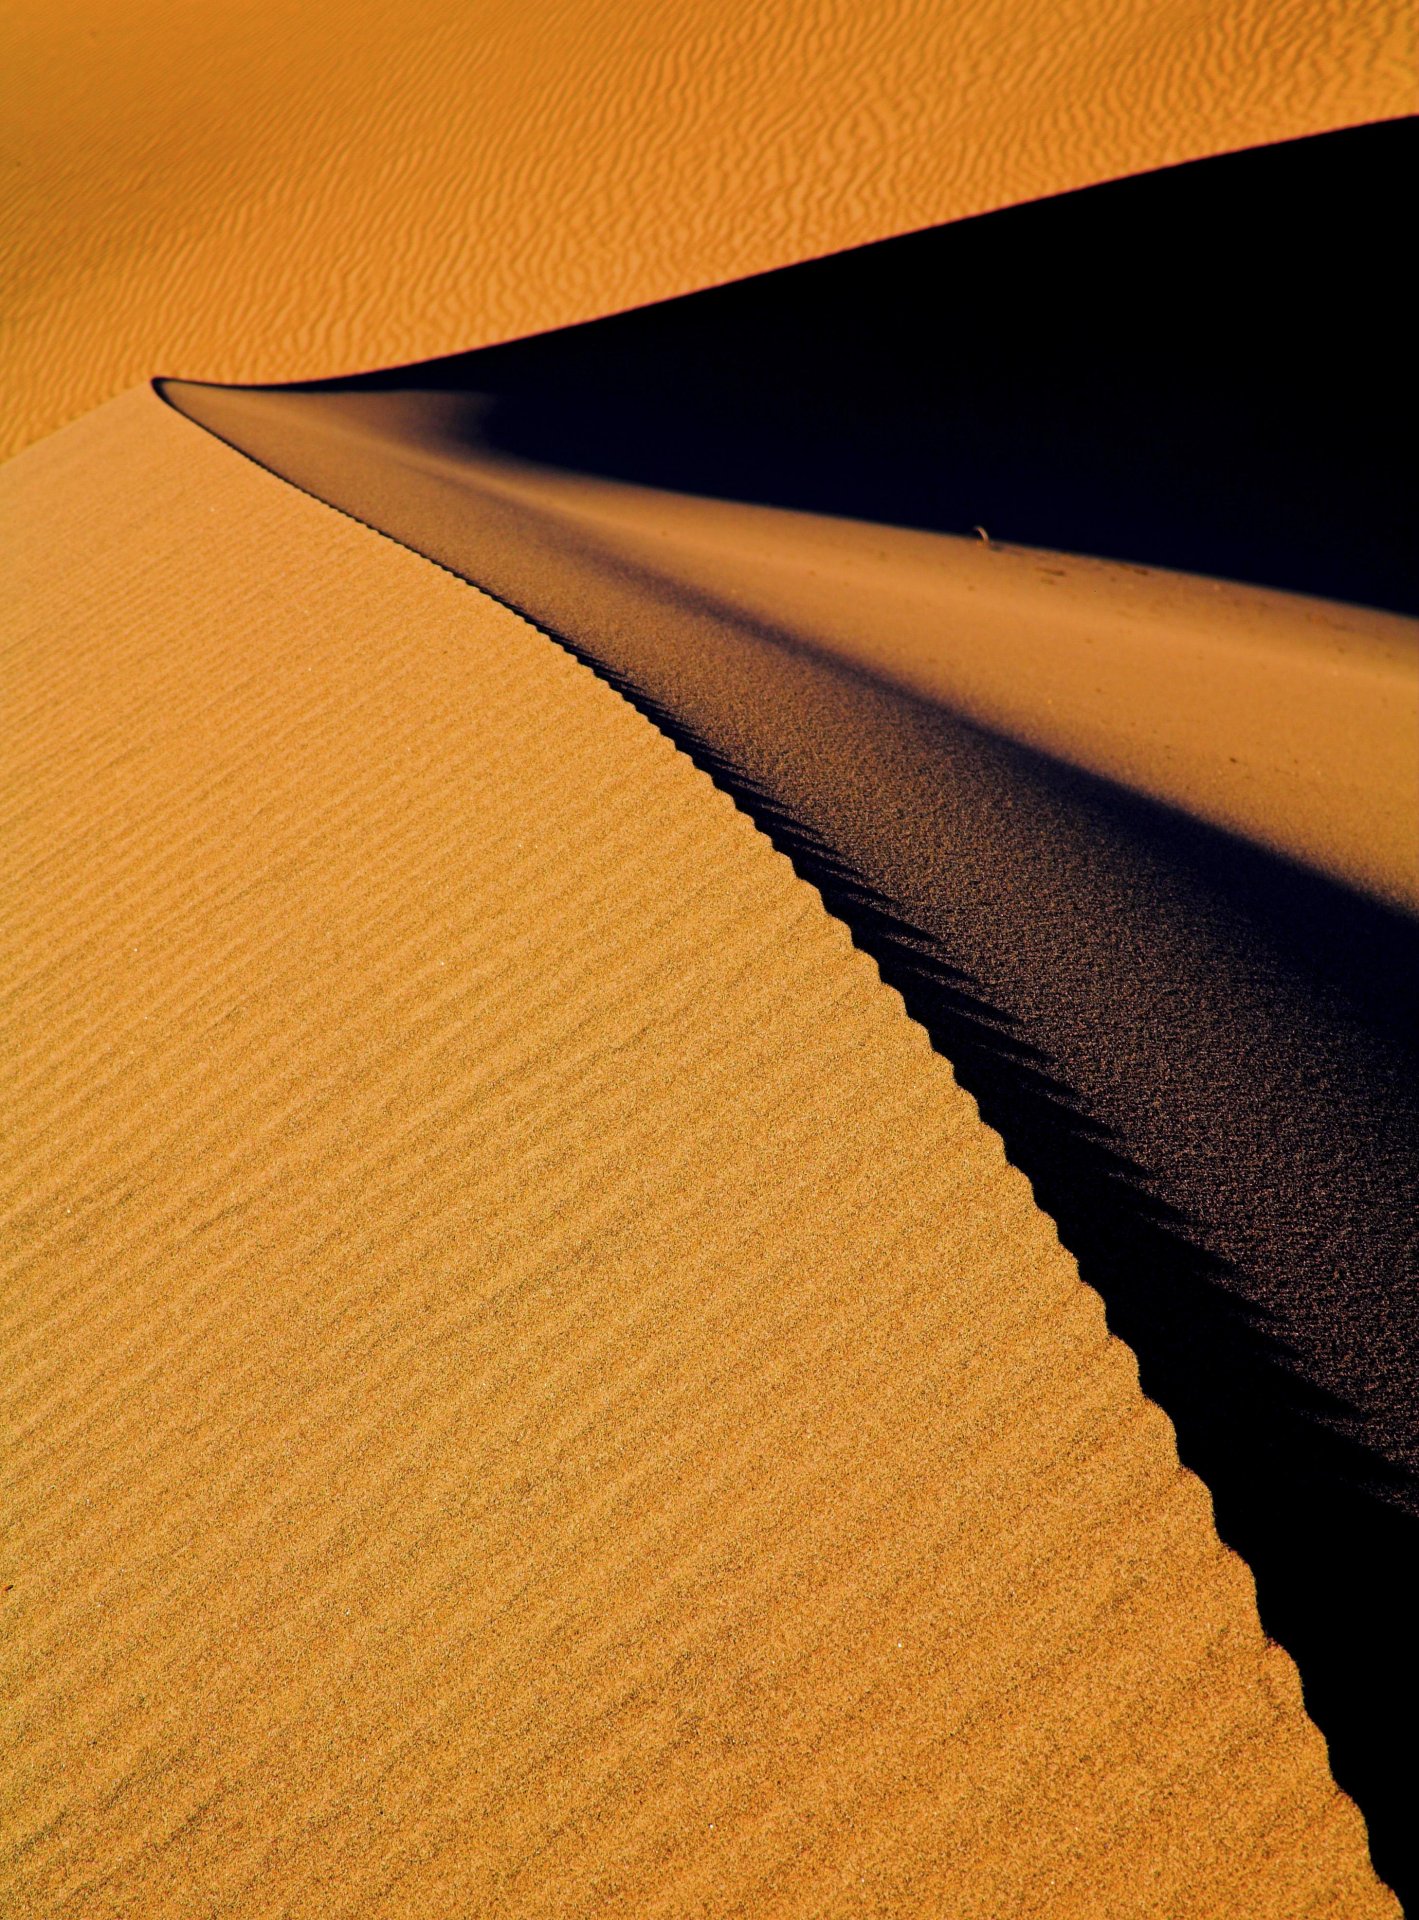 Mesquite Flat Dunes, Death Valley National Park, California, USA.jpg